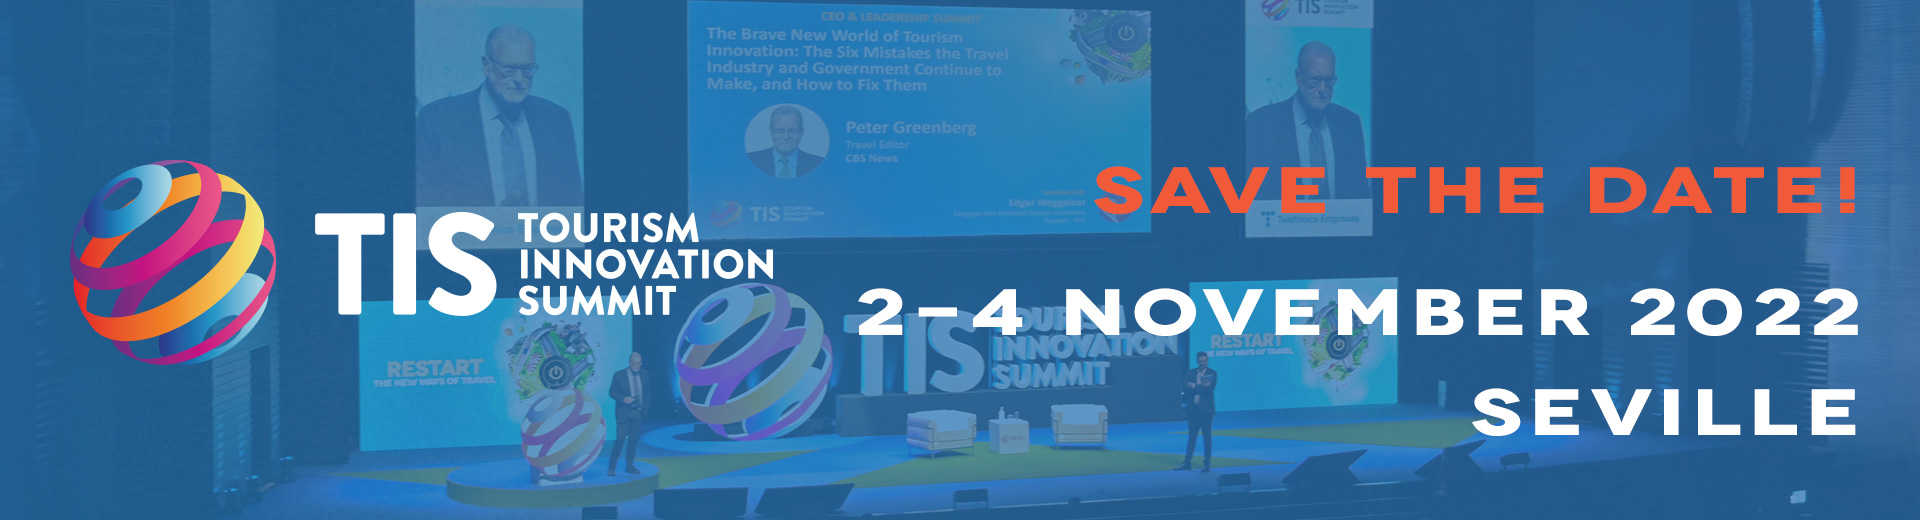 Tourism Innovation Summit - TIS